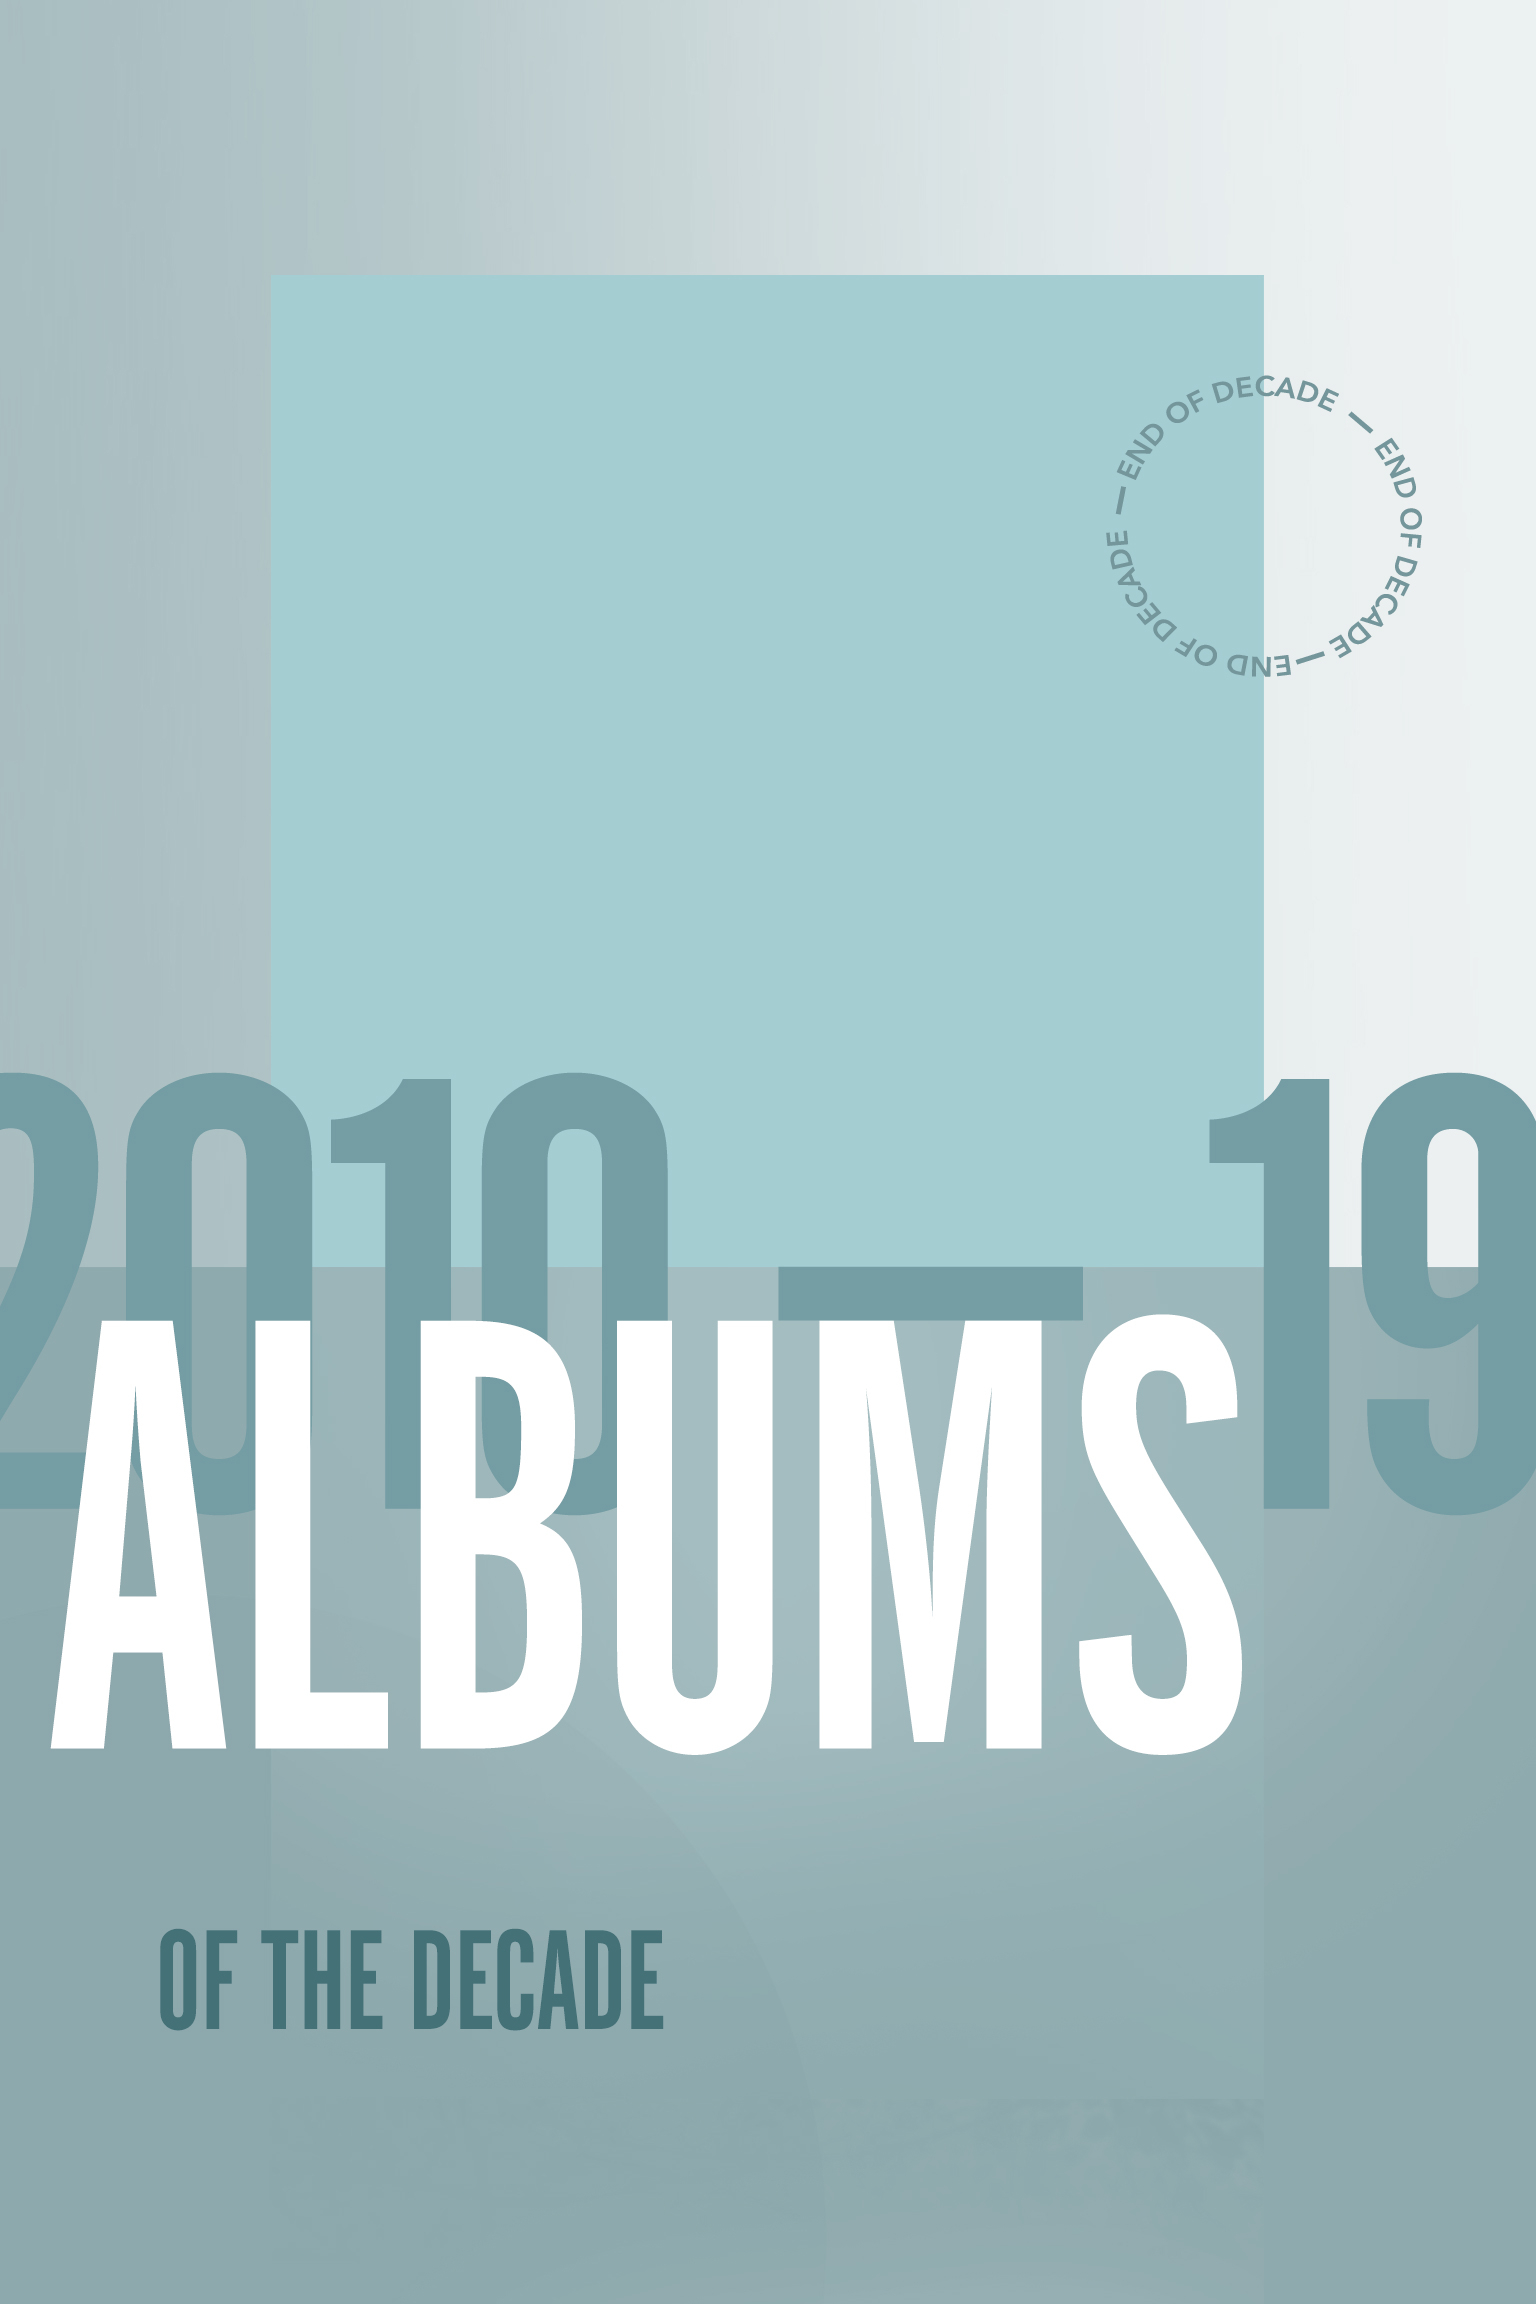 Ra 2010 19 Albums Of The Decade